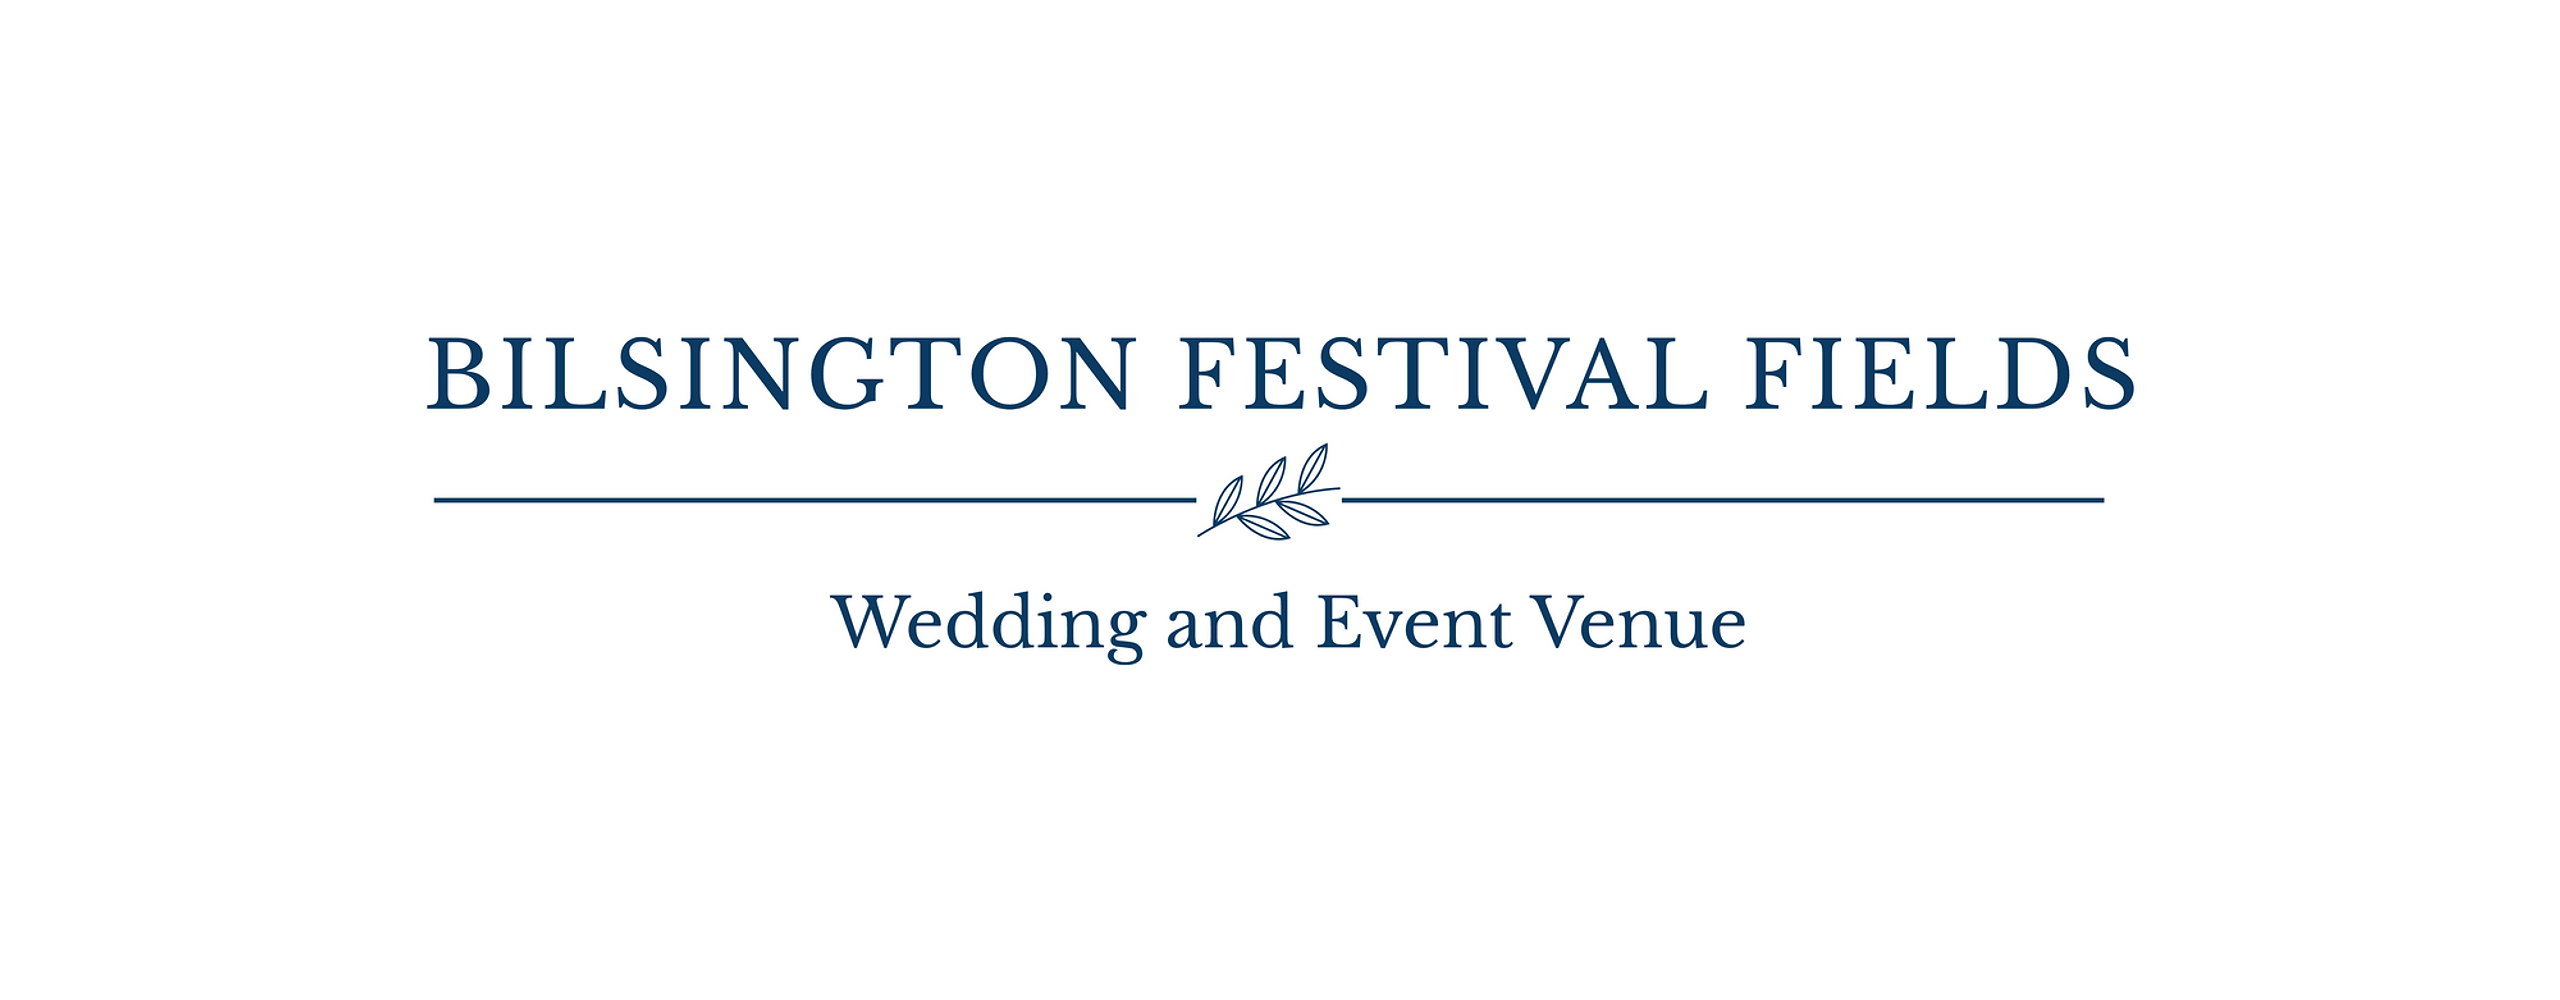 Bilsington festival fields logo christopher james events